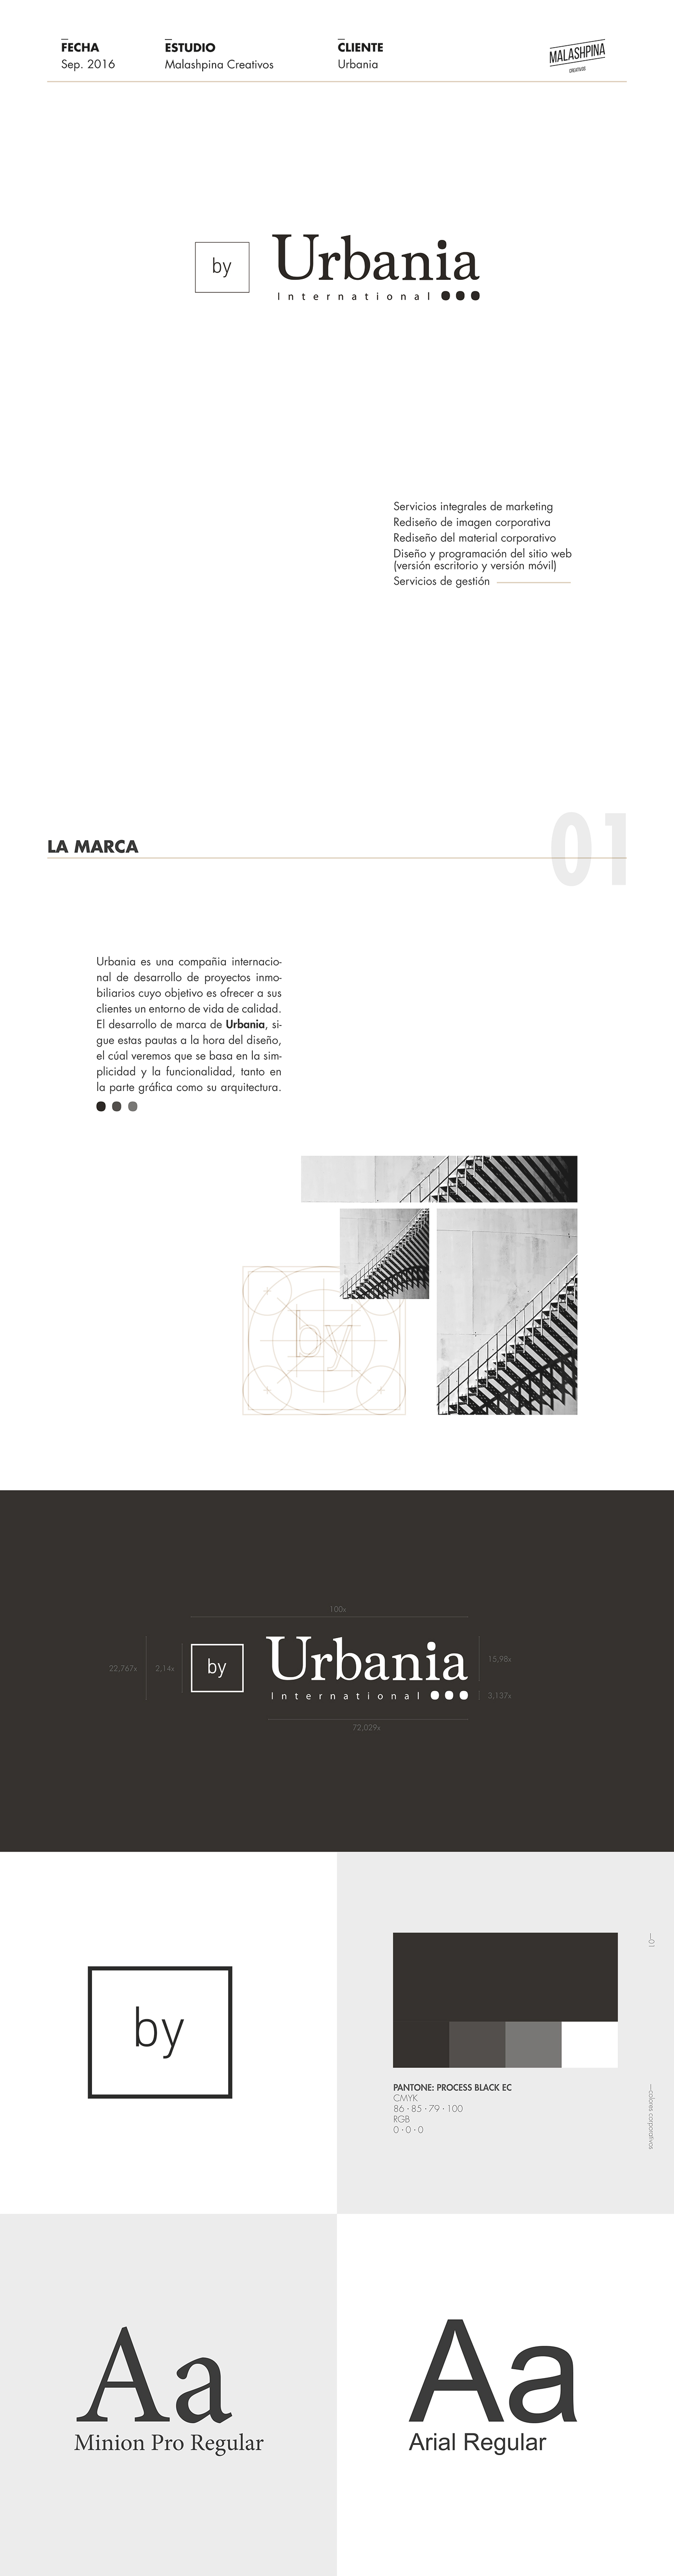 branding  editorial design Web Real State architecture graphic design 